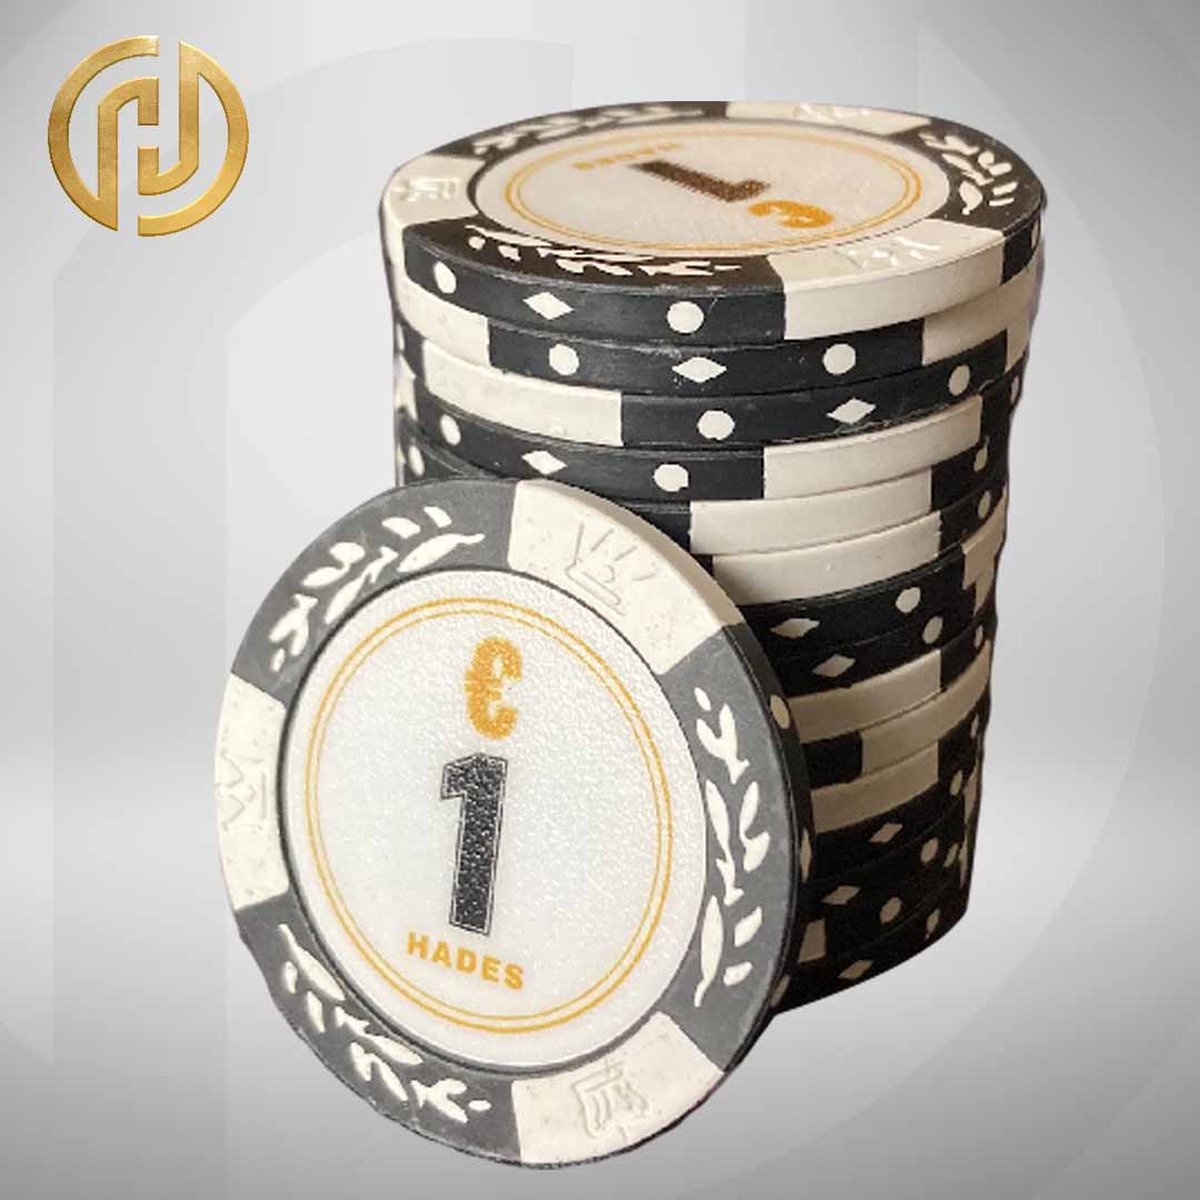 Mec Hades Cashgame Classic Poker Chips €1 wit (25 stuks) pokerchips pokerfiches poker fiches clay chips pokerspel pokerset poker set